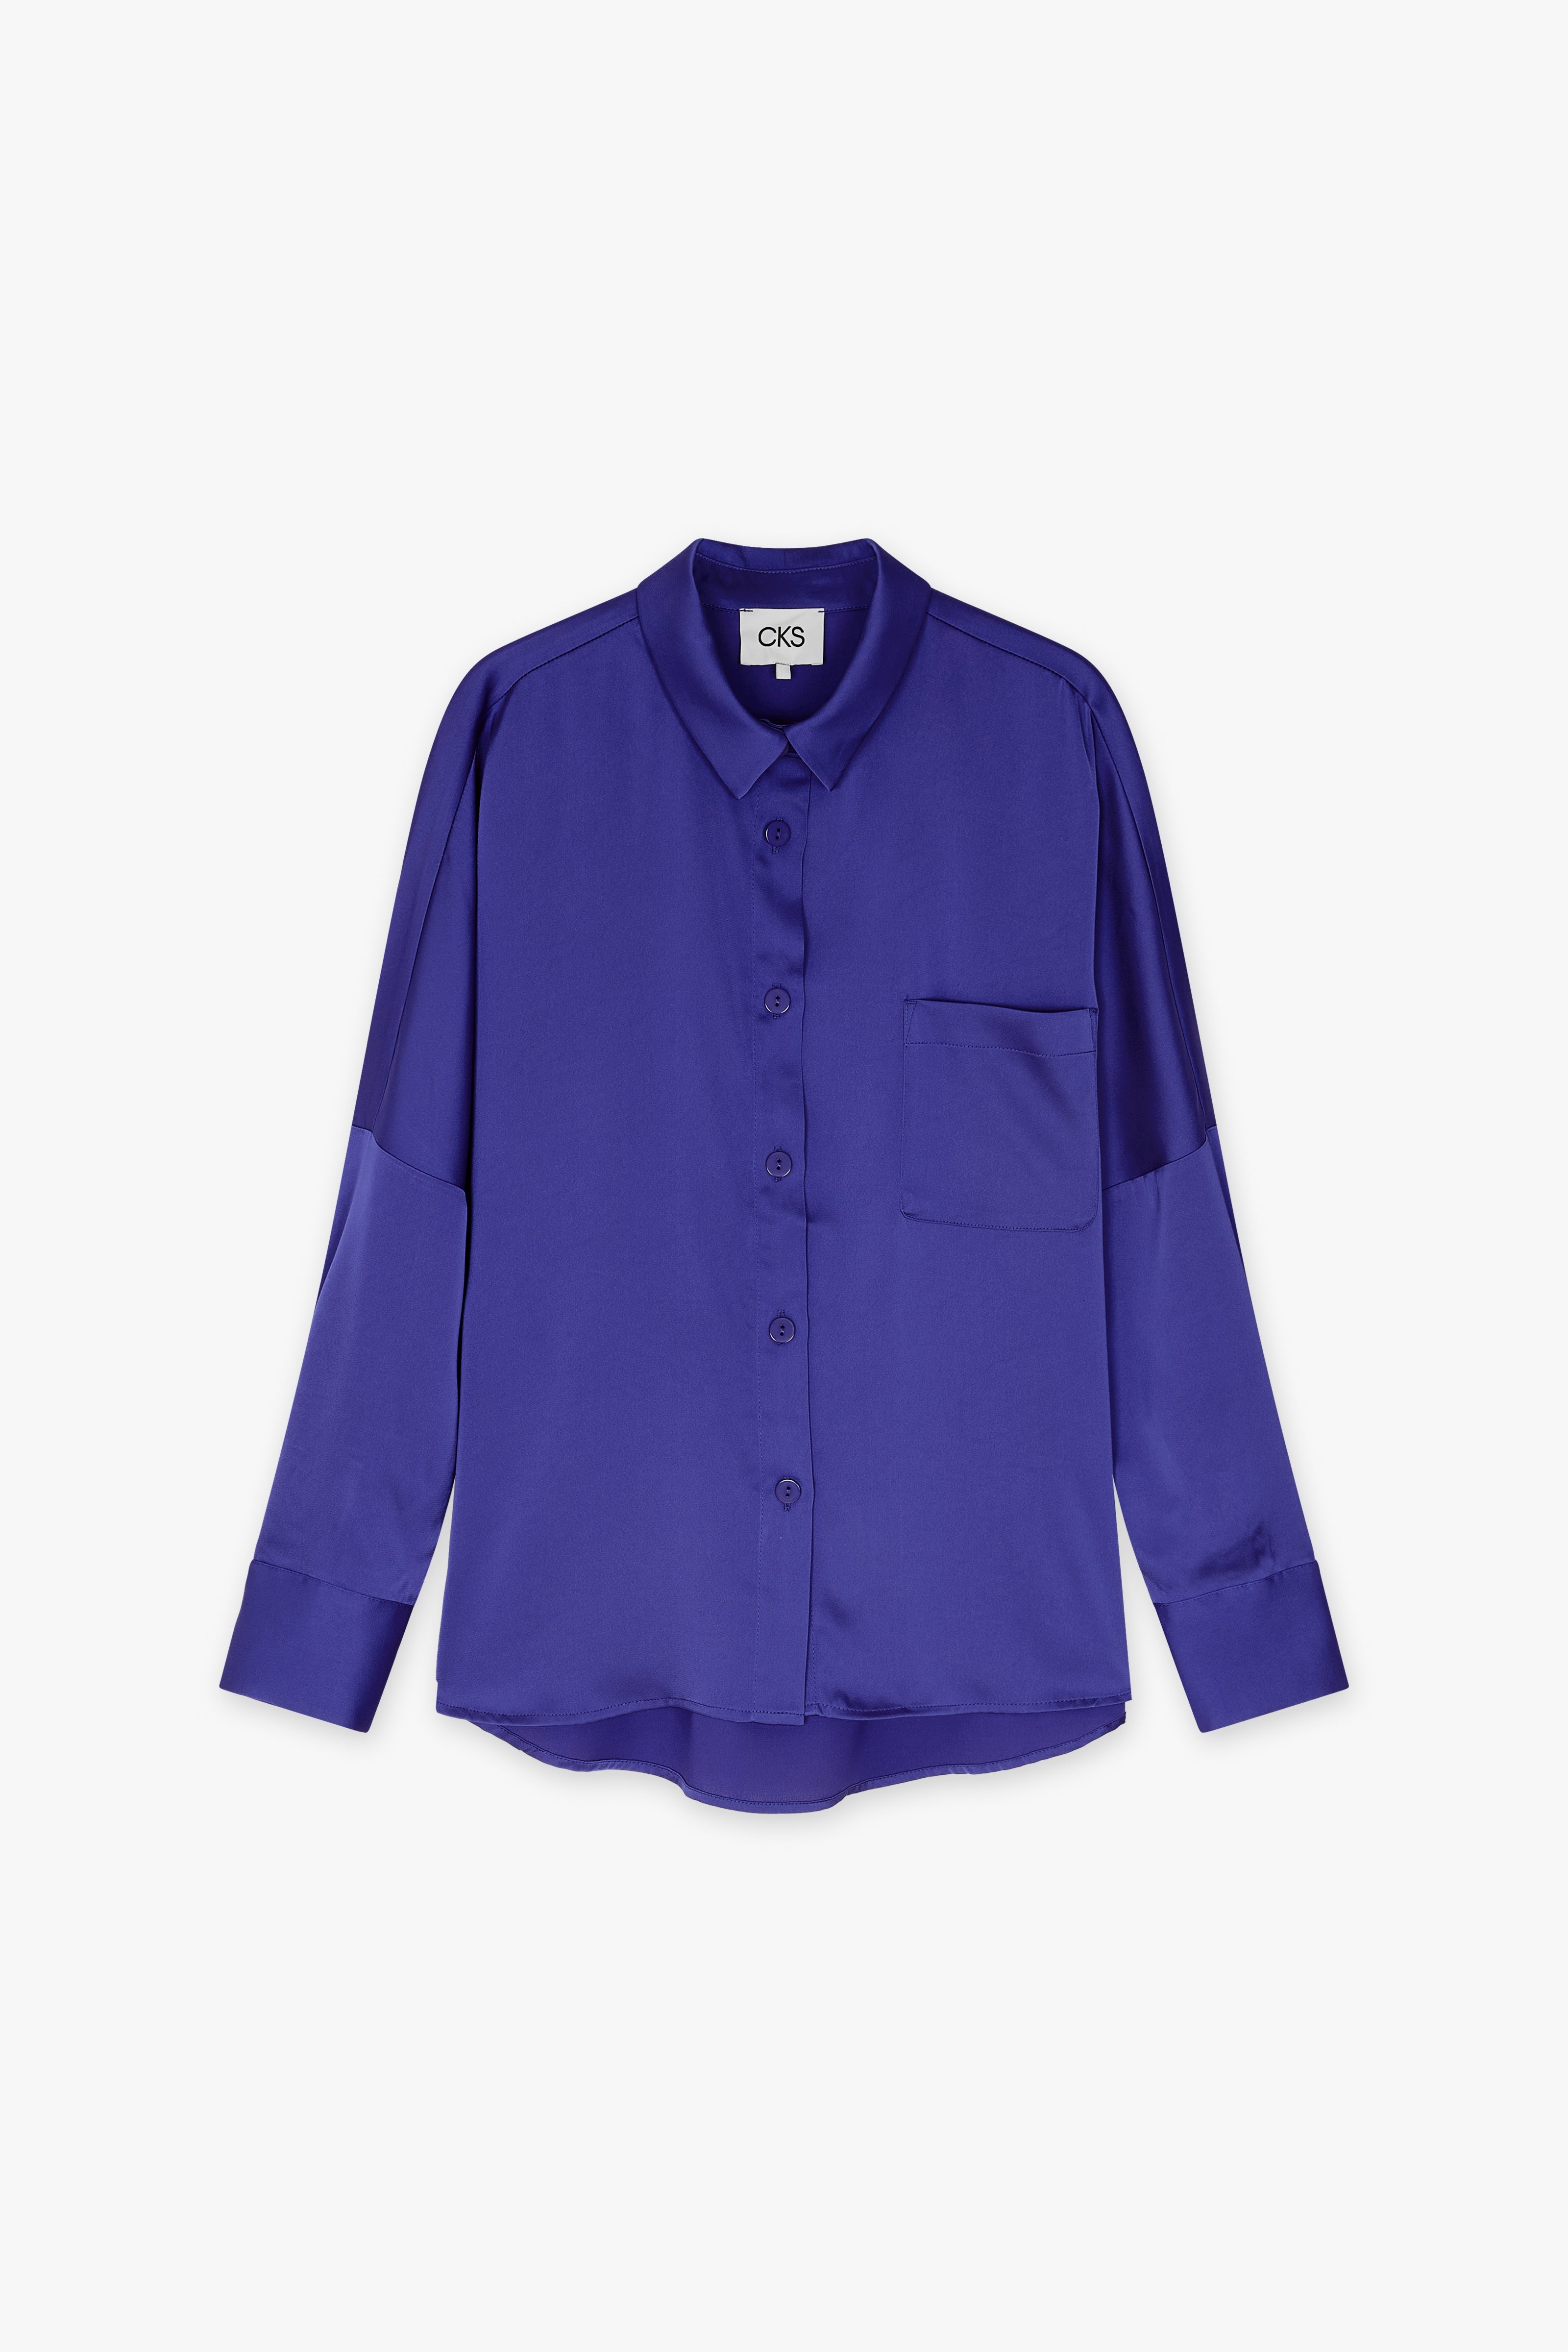 CKS Dames - WAZNA - blouse short sleeves - blue